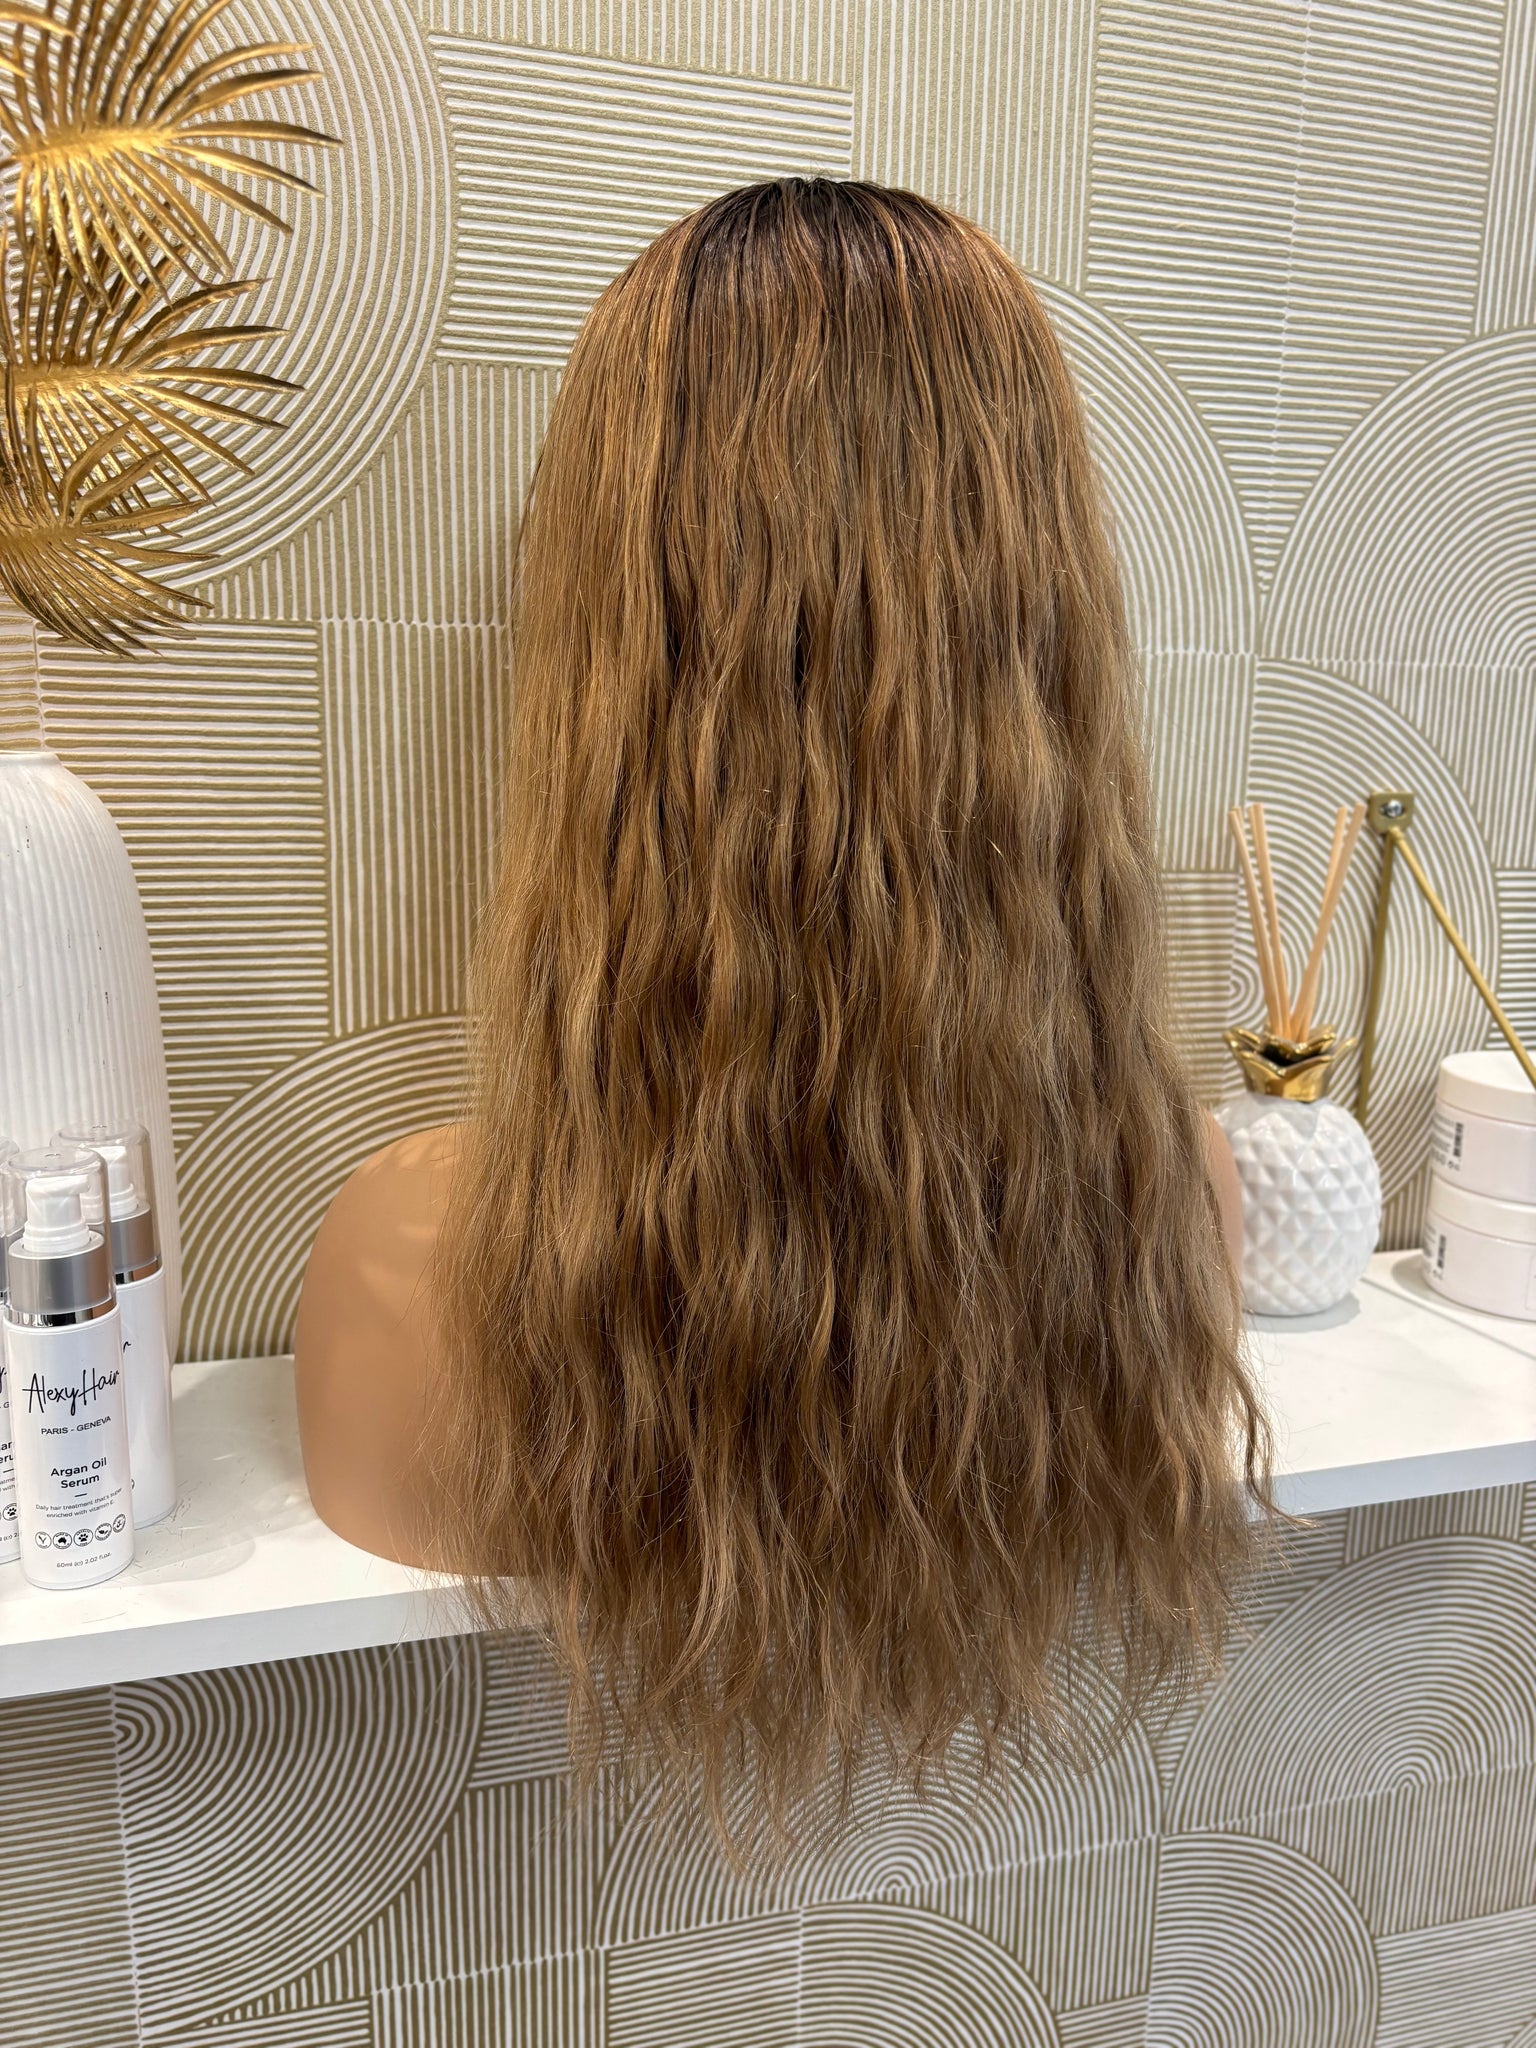 Lara - integral gold + lace top  / 20 / 150 % Volume  / European hair / natural wavy